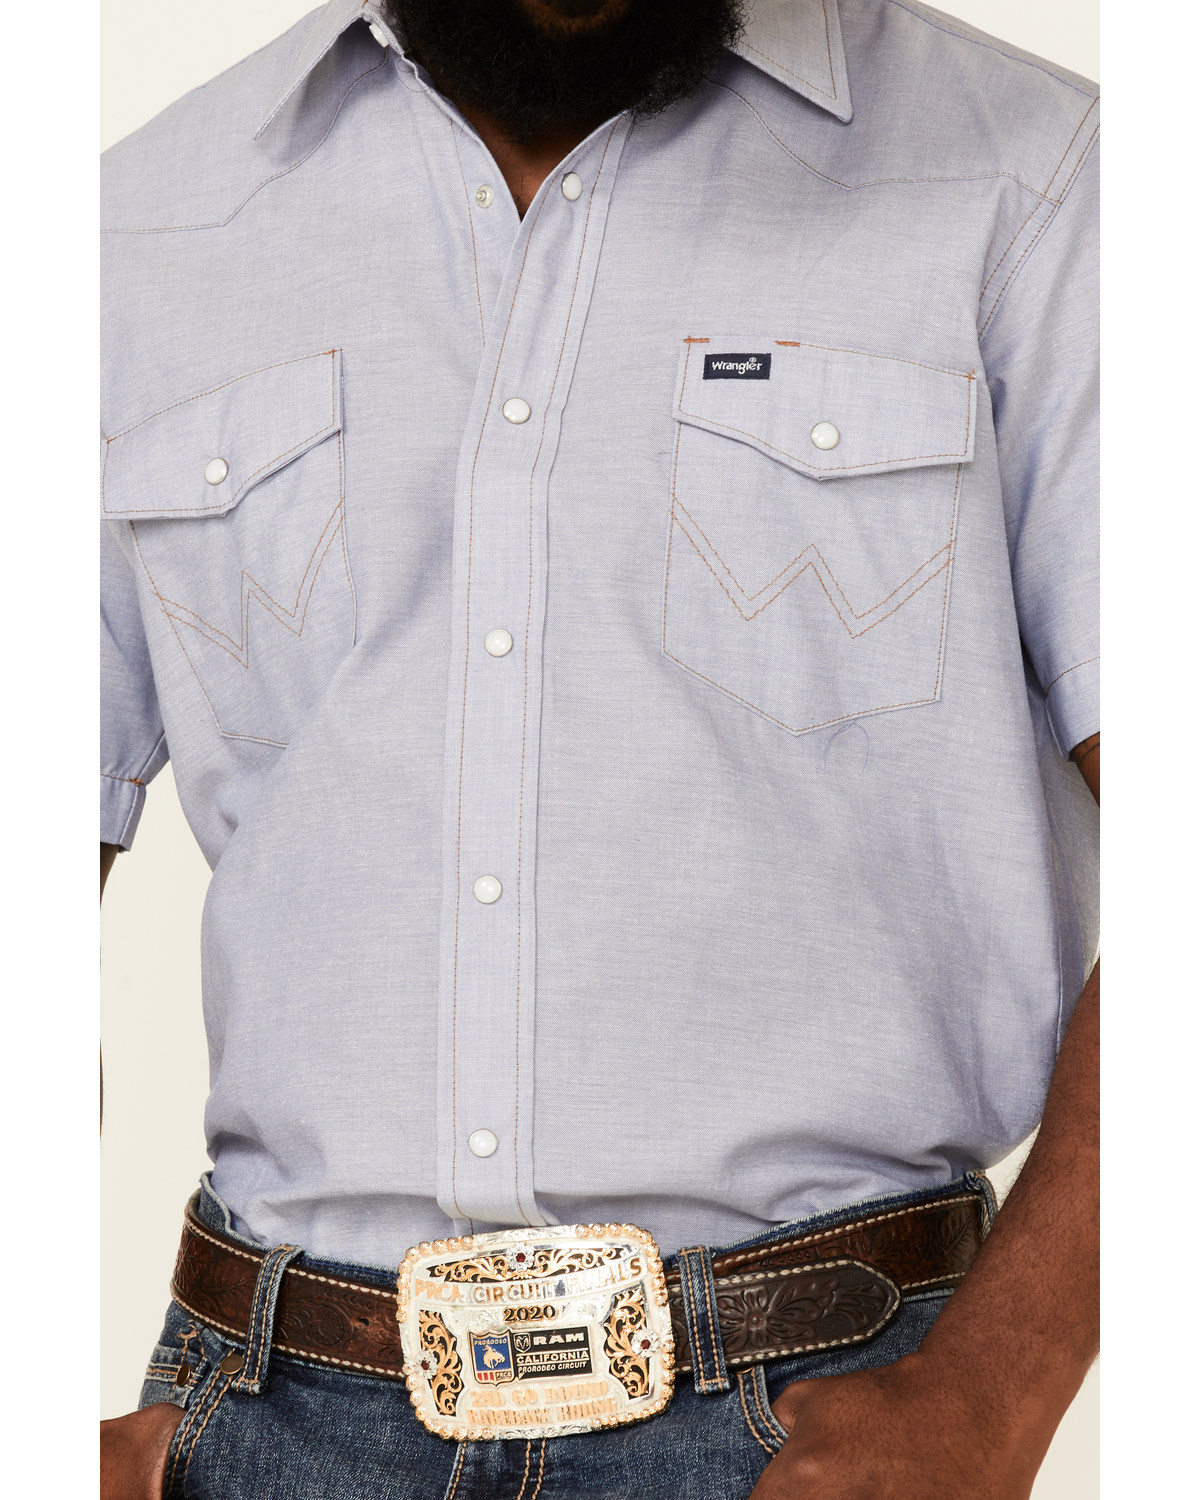 Wrangler Chambray Short Sleeve Work - Mens Shirt  - 1070131Mw - image 3 of 4